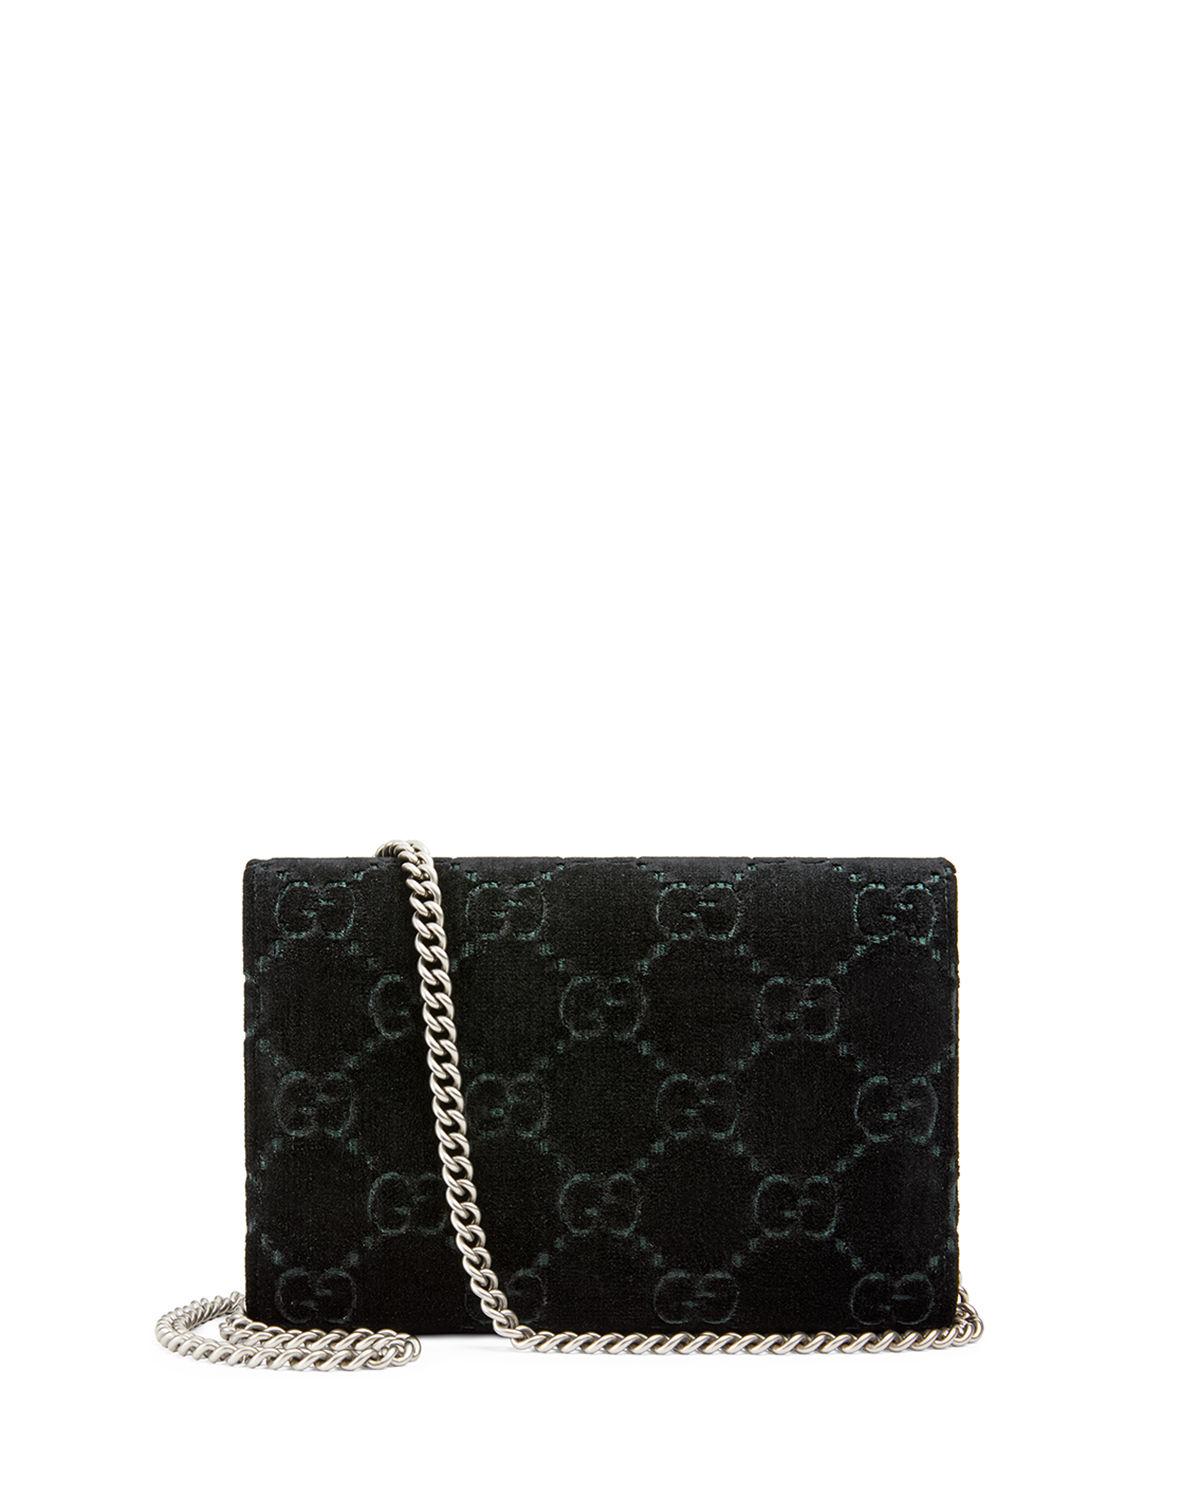 Gucci Dionysus Velvet GG Supreme Wallet On Chain in Black - Lyst